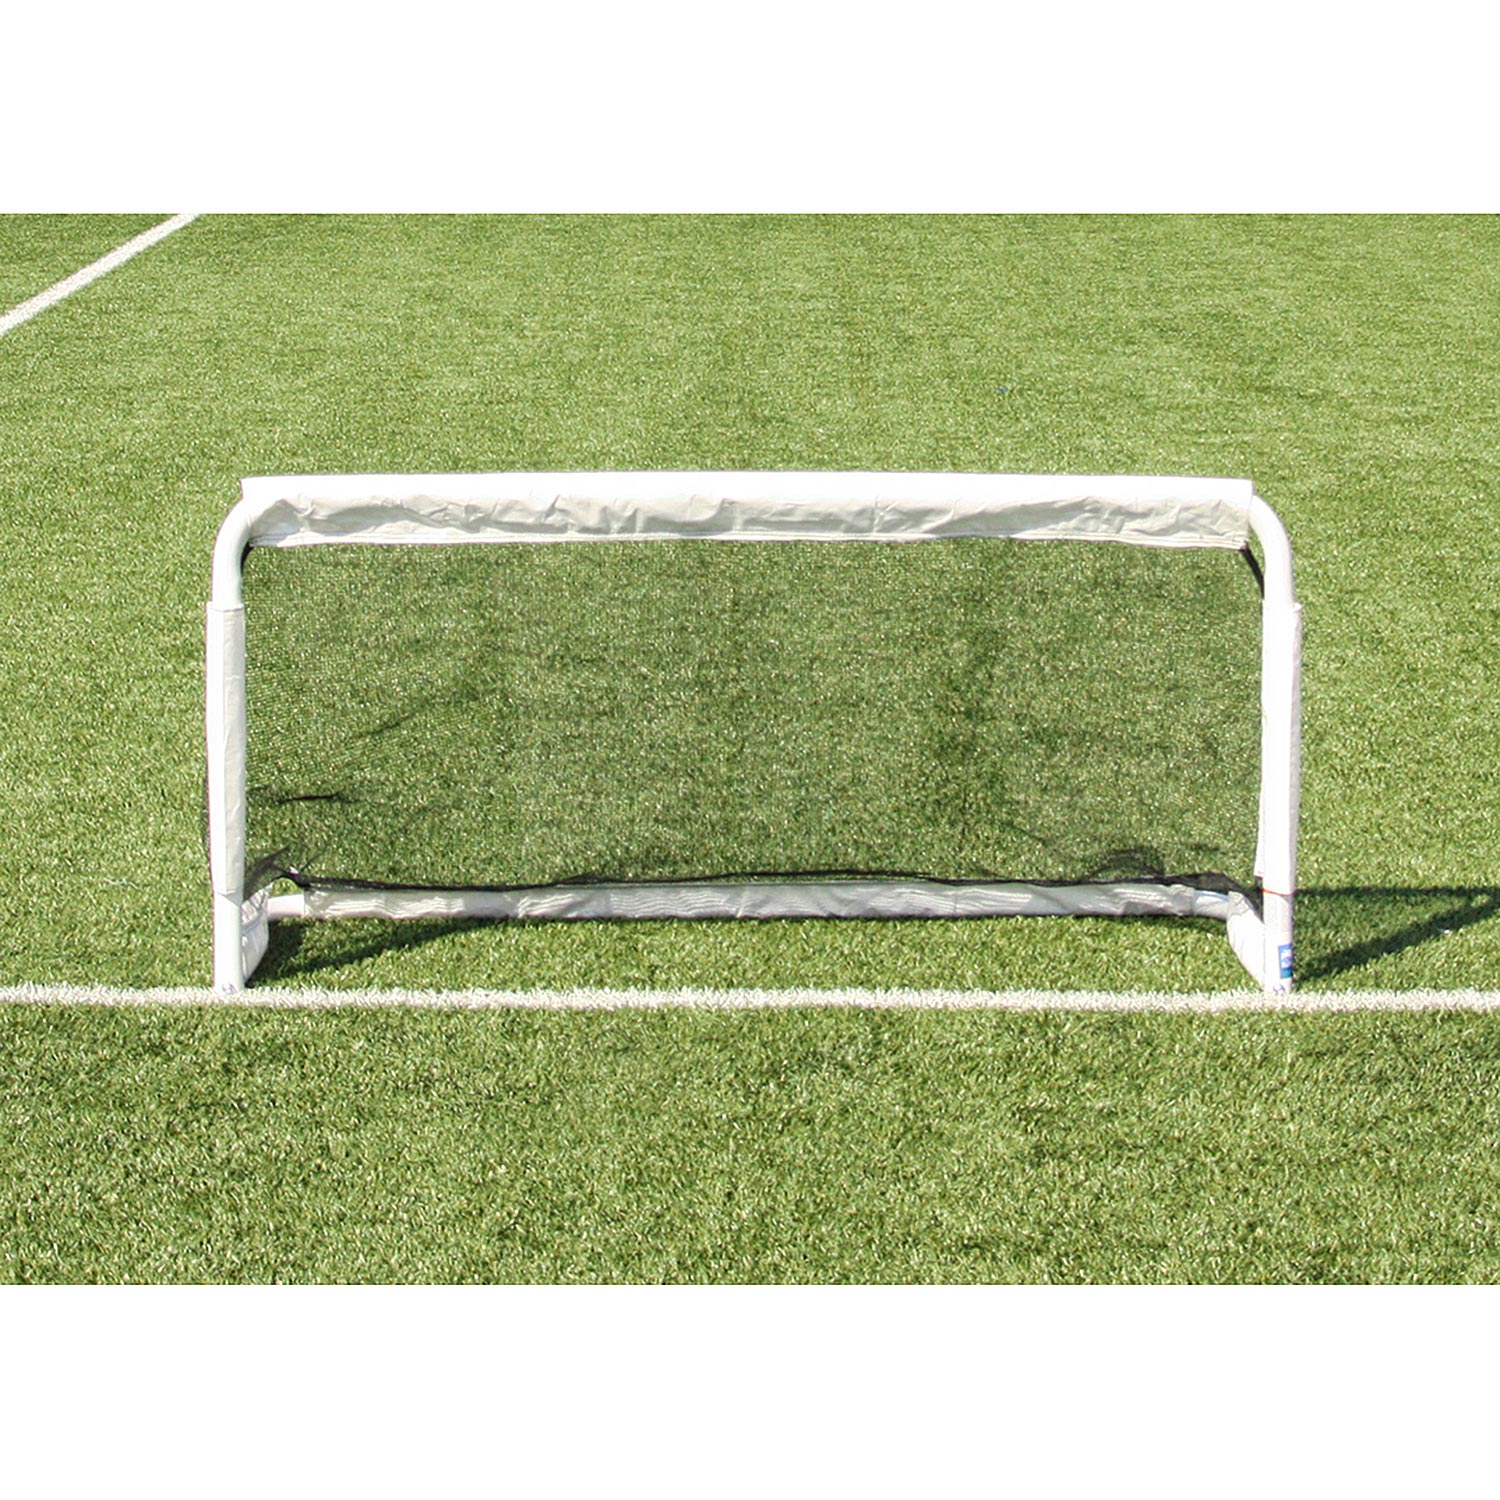 Soccer goal Buffalo Euro Cup (150x75x60cm)